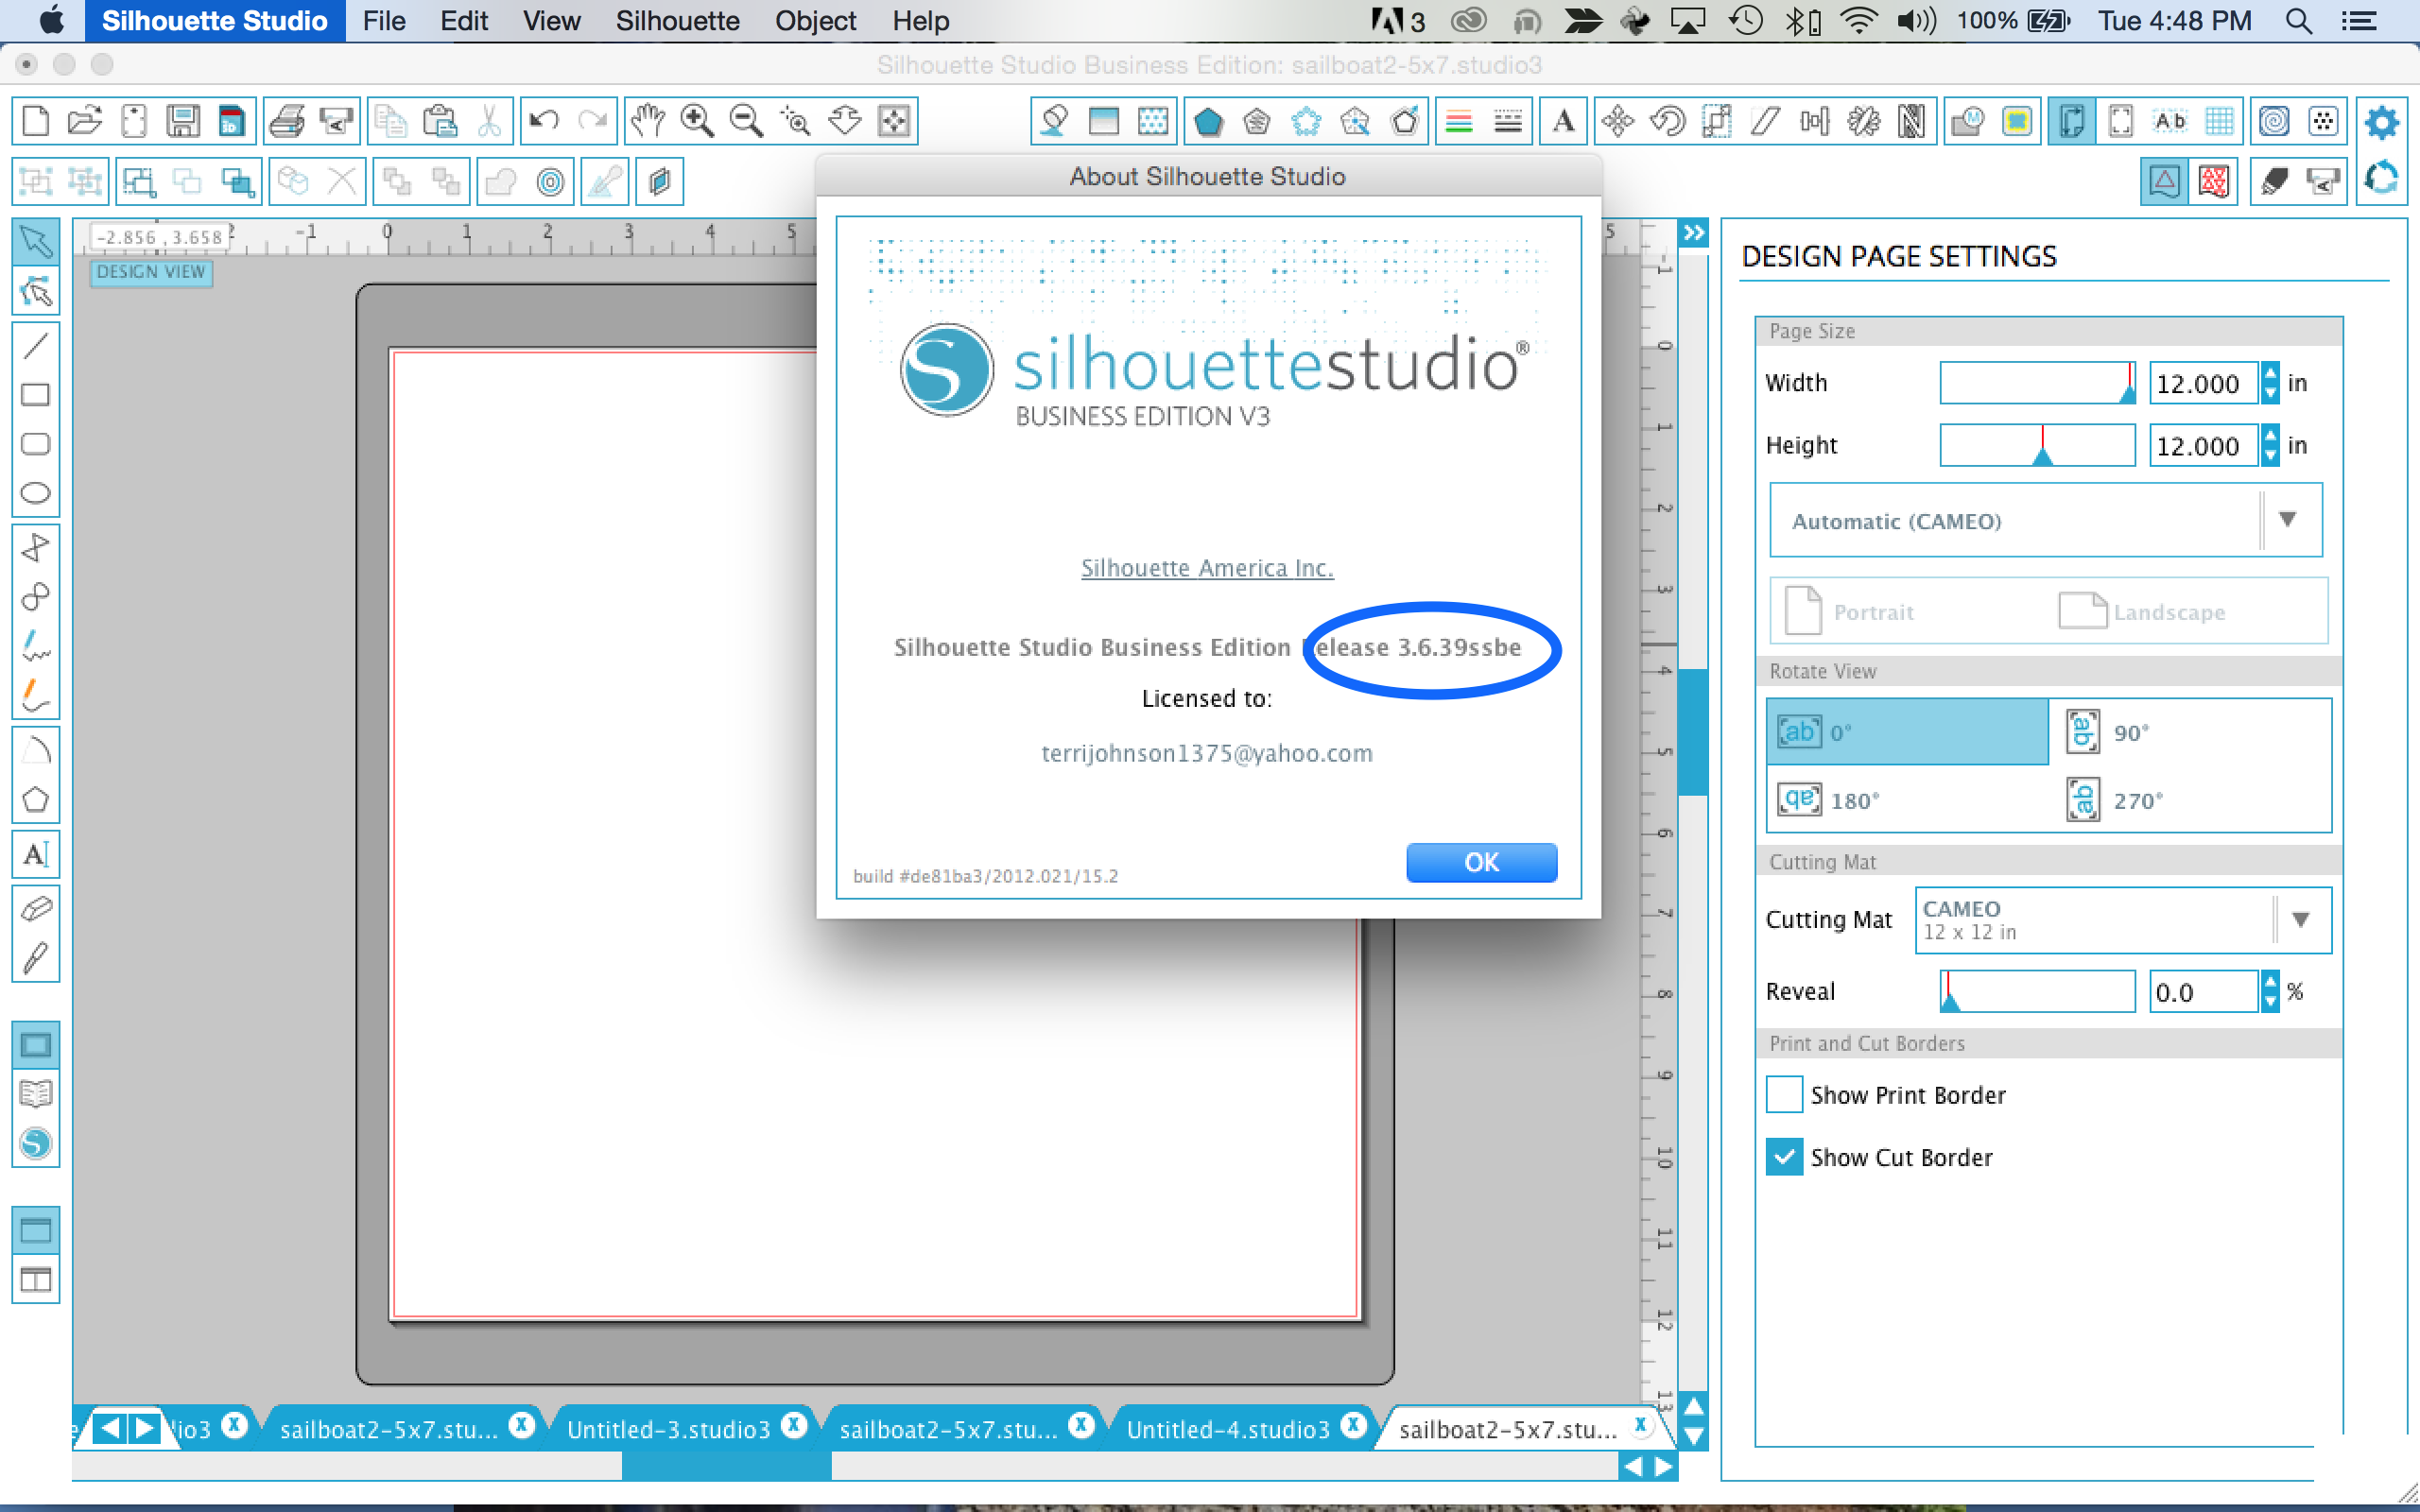 silhouette studio designer edition download